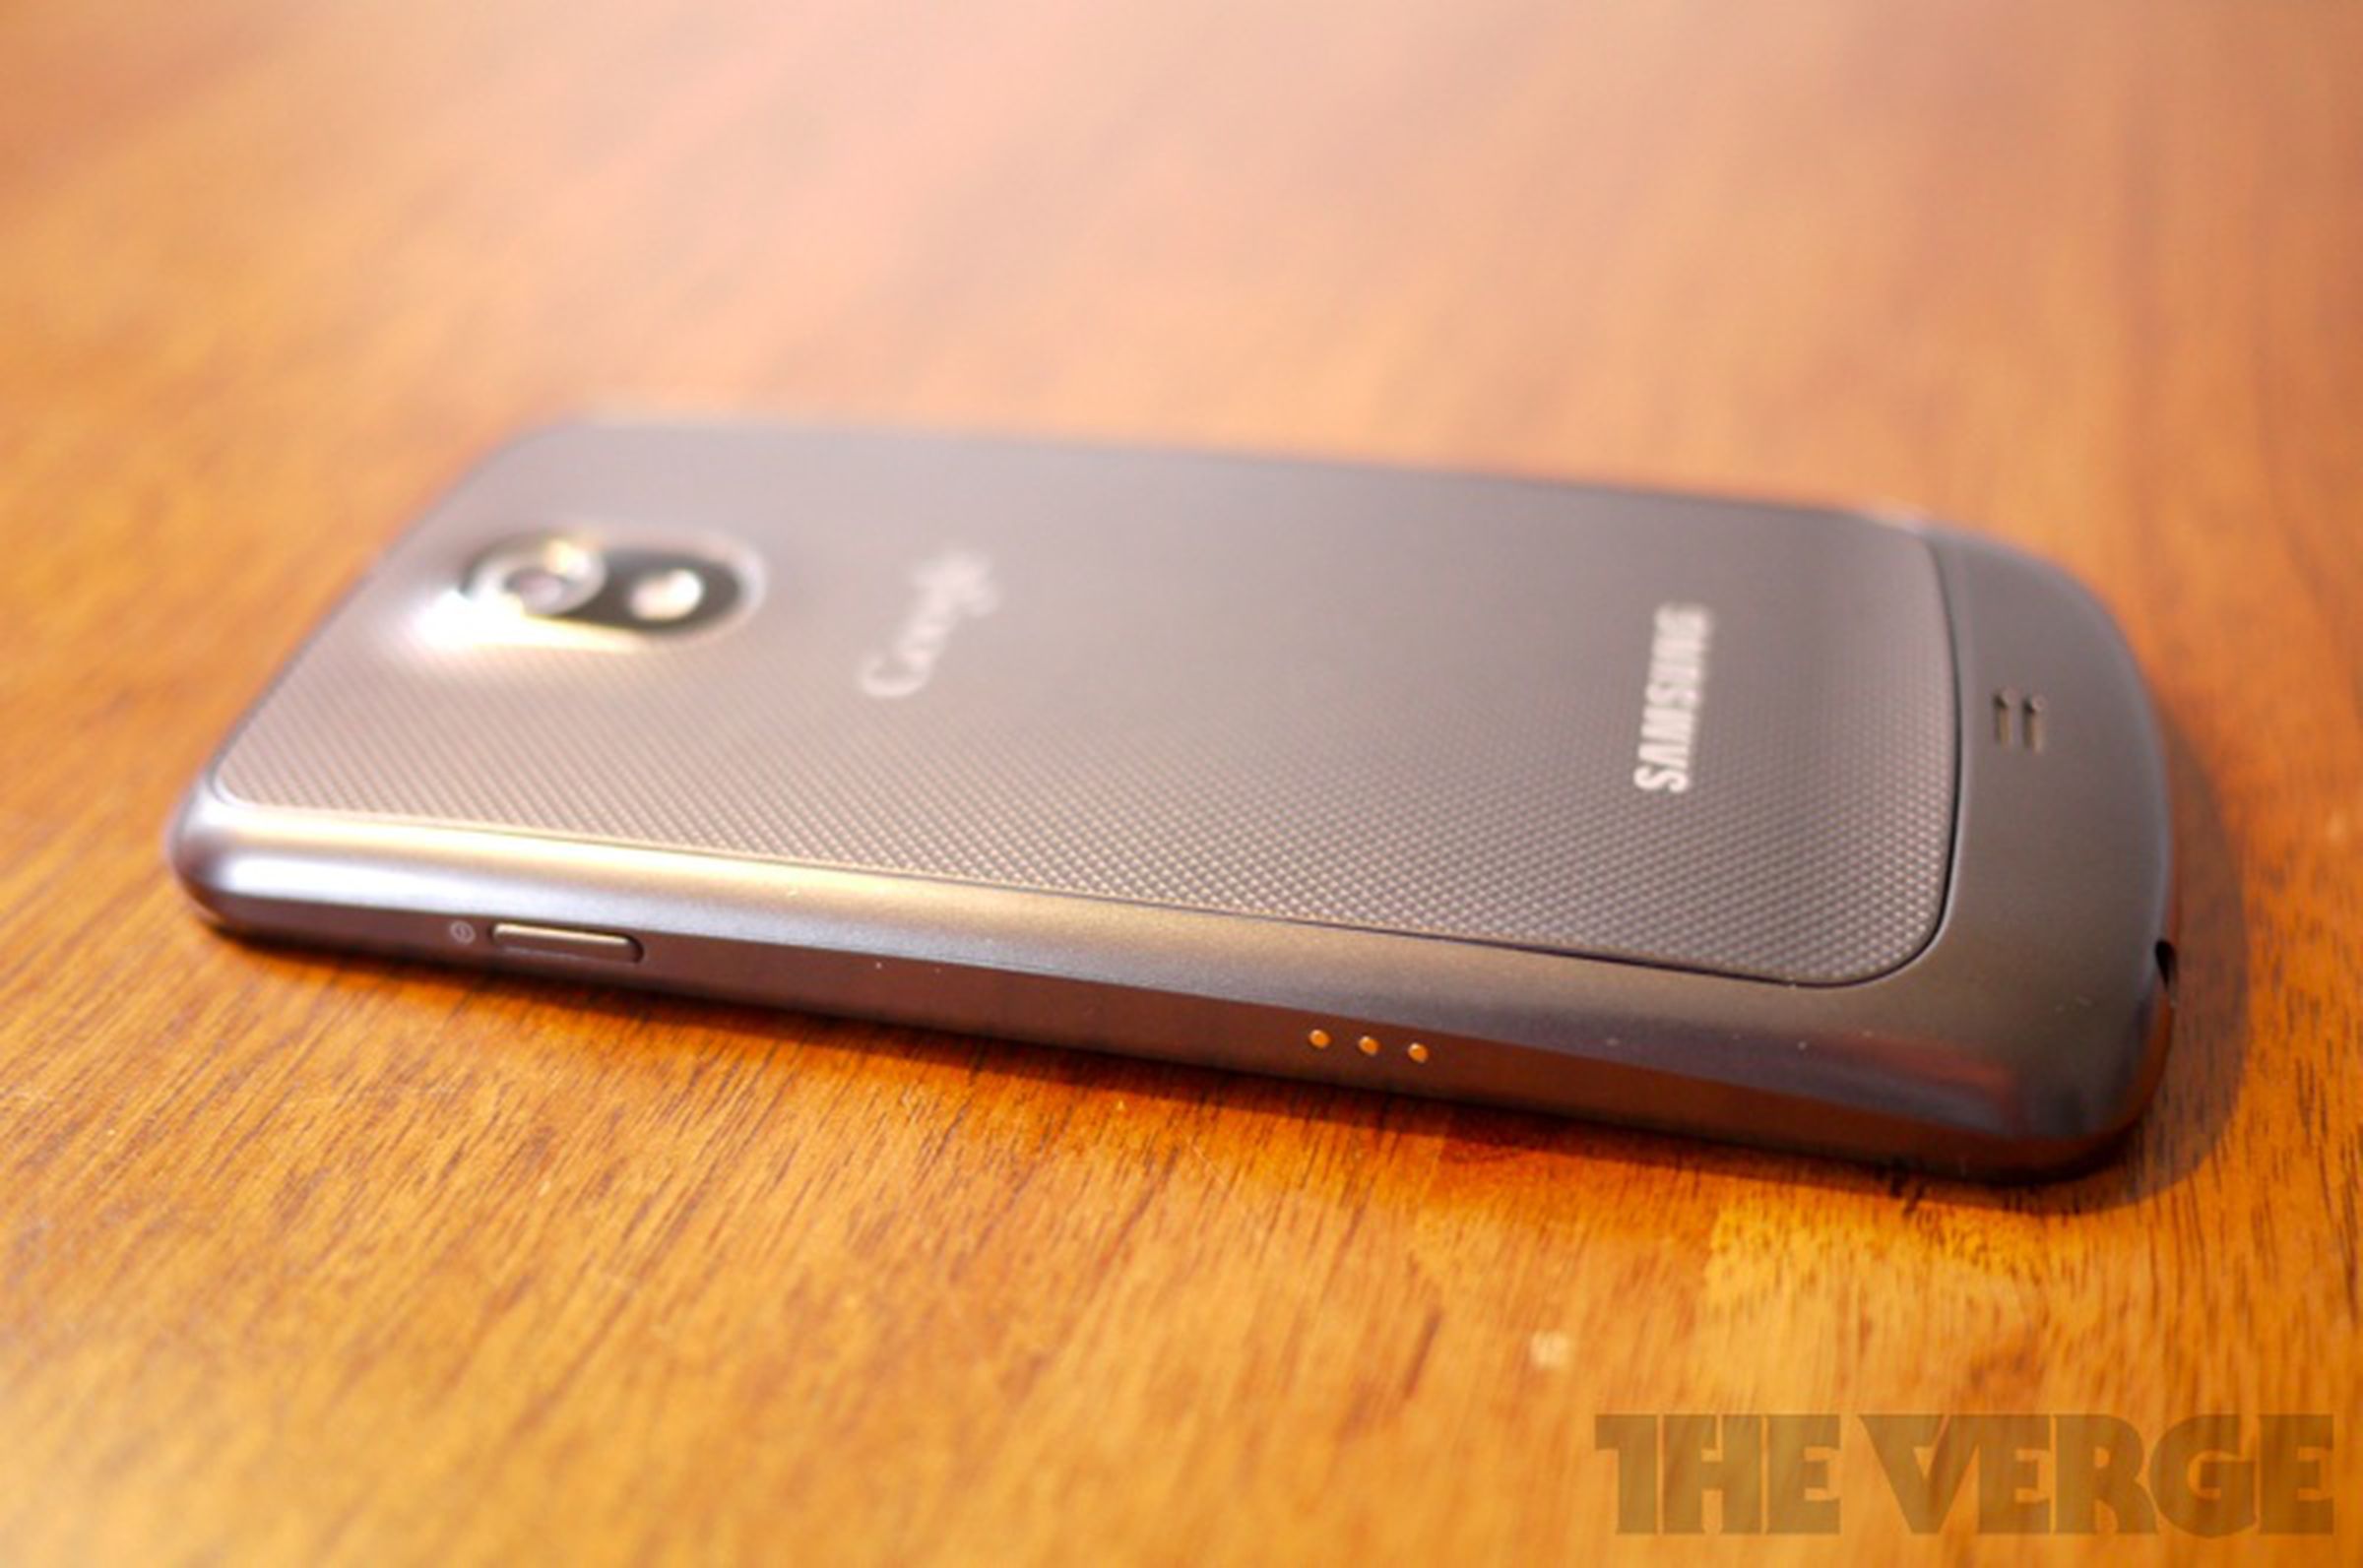 Galaxy Nexus review hands-on